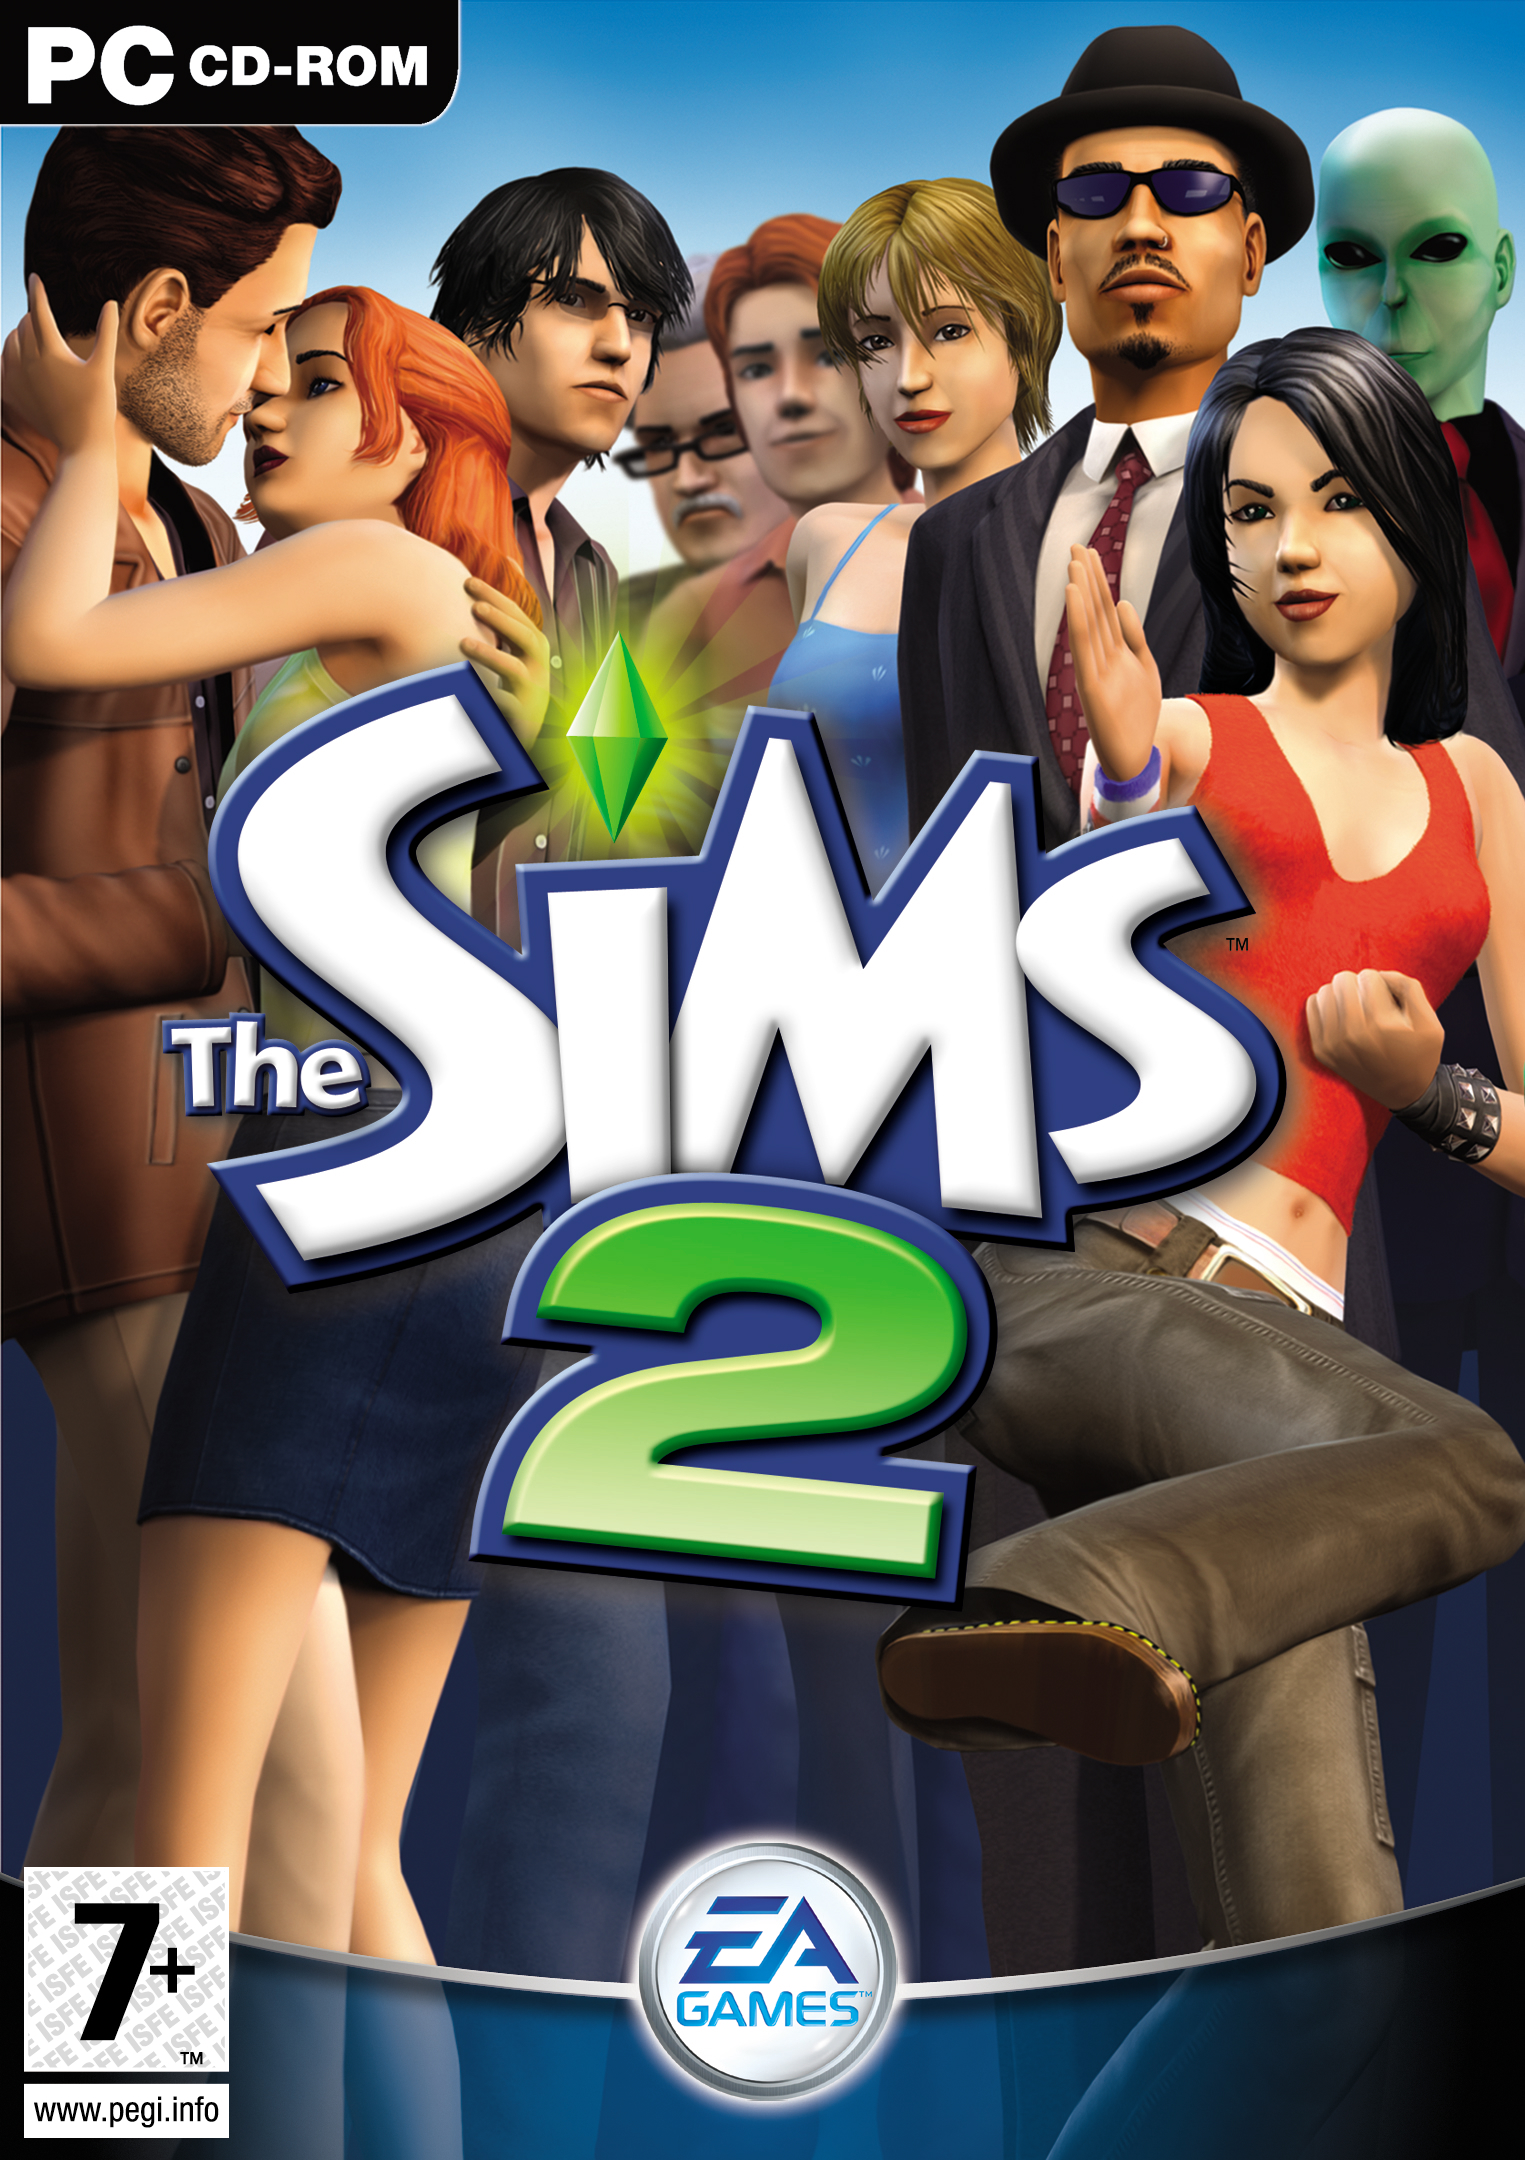 The Sims 2 cover art.jpg